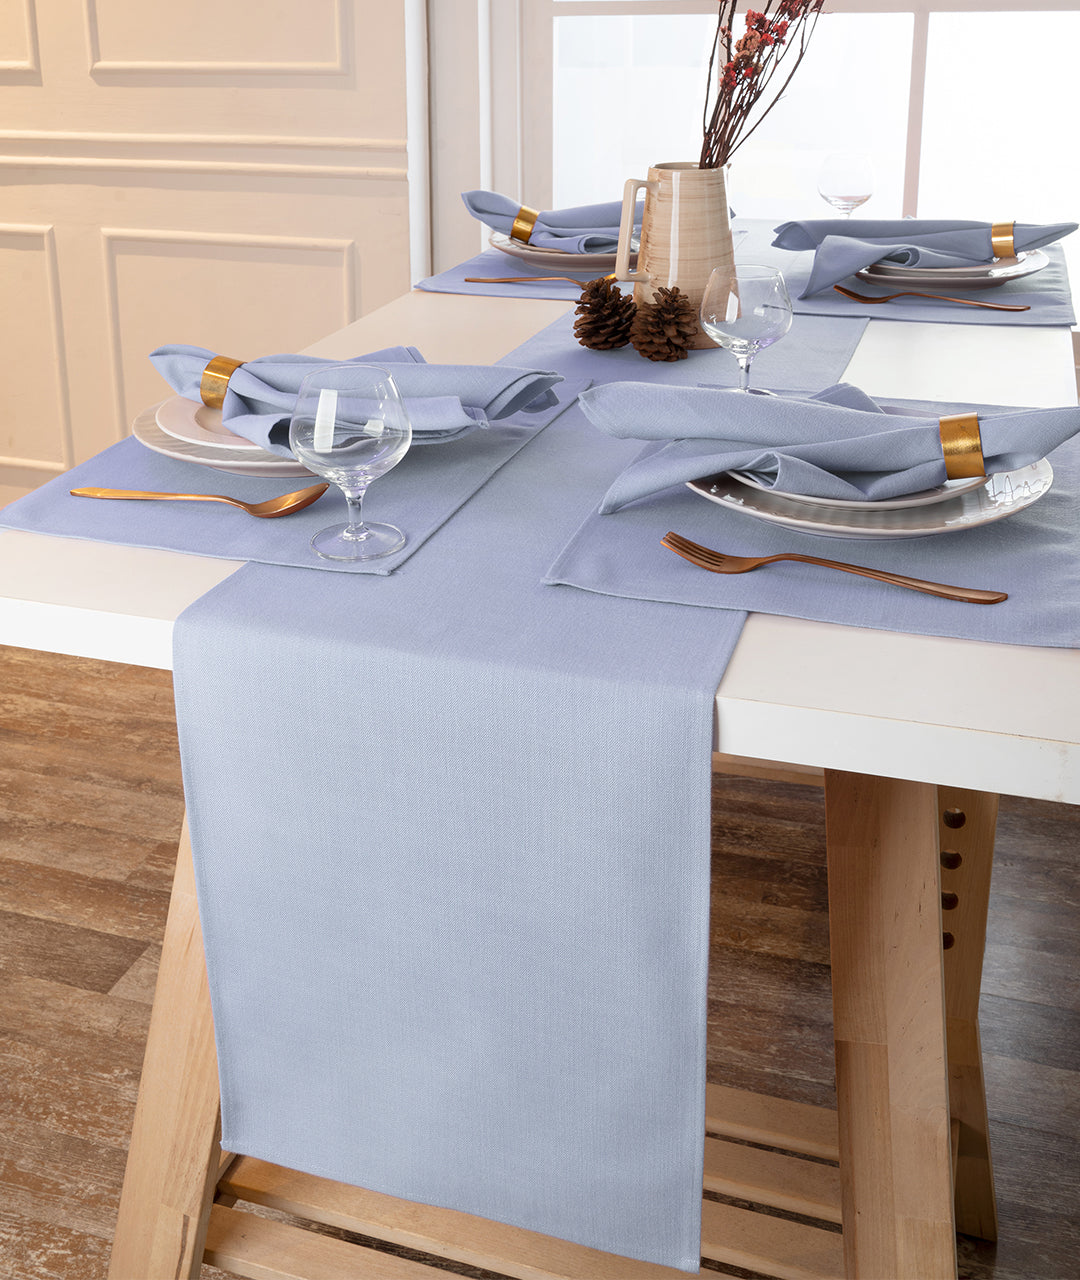 Powder Blue Linen Textured Table Runner - Plain